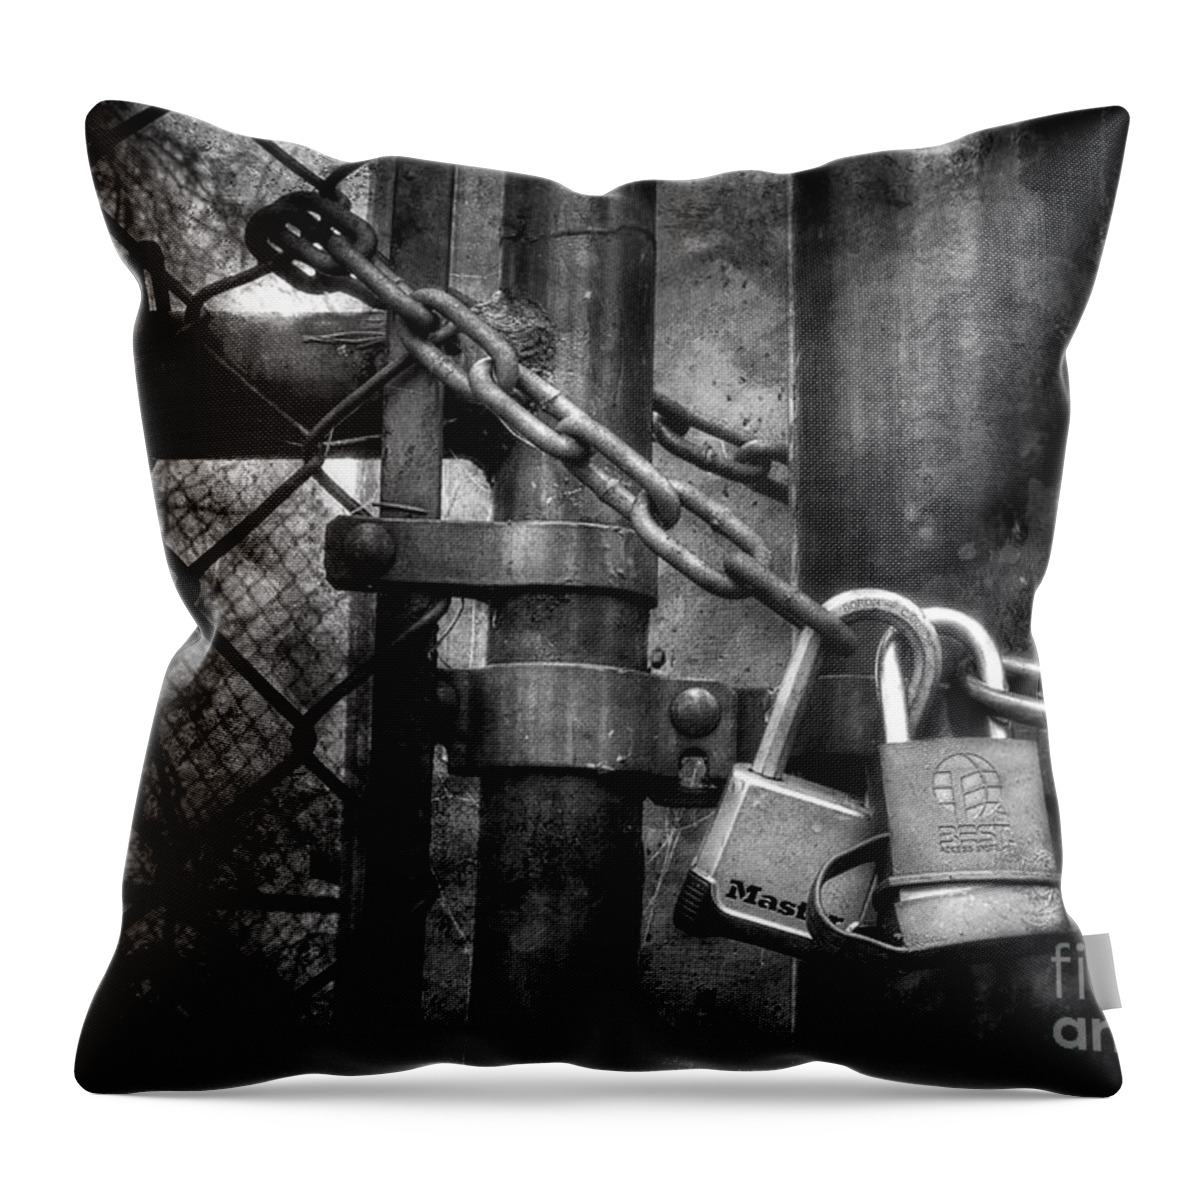 Chain Throw Pillow featuring the photograph Locks Locking Locks by Michael Eingle